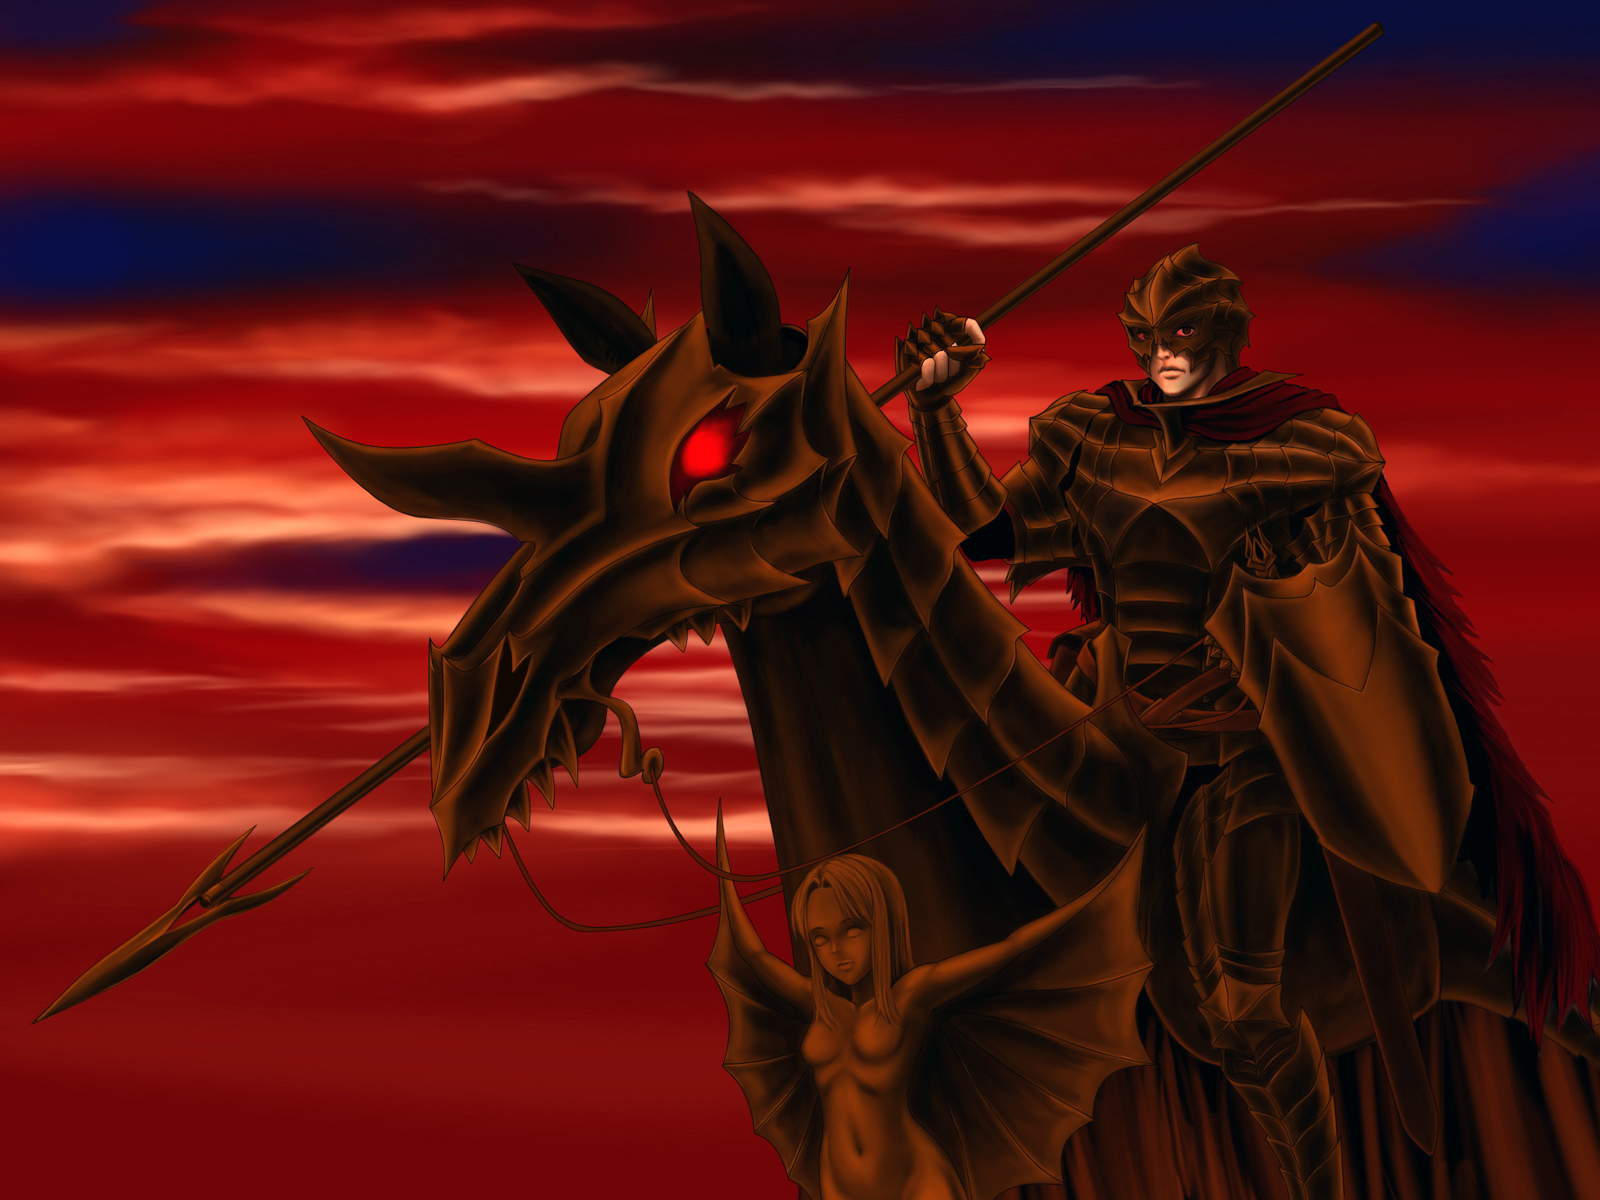 animated skull wallpaper,cg artwork,fictional character,sky,demon,warlord